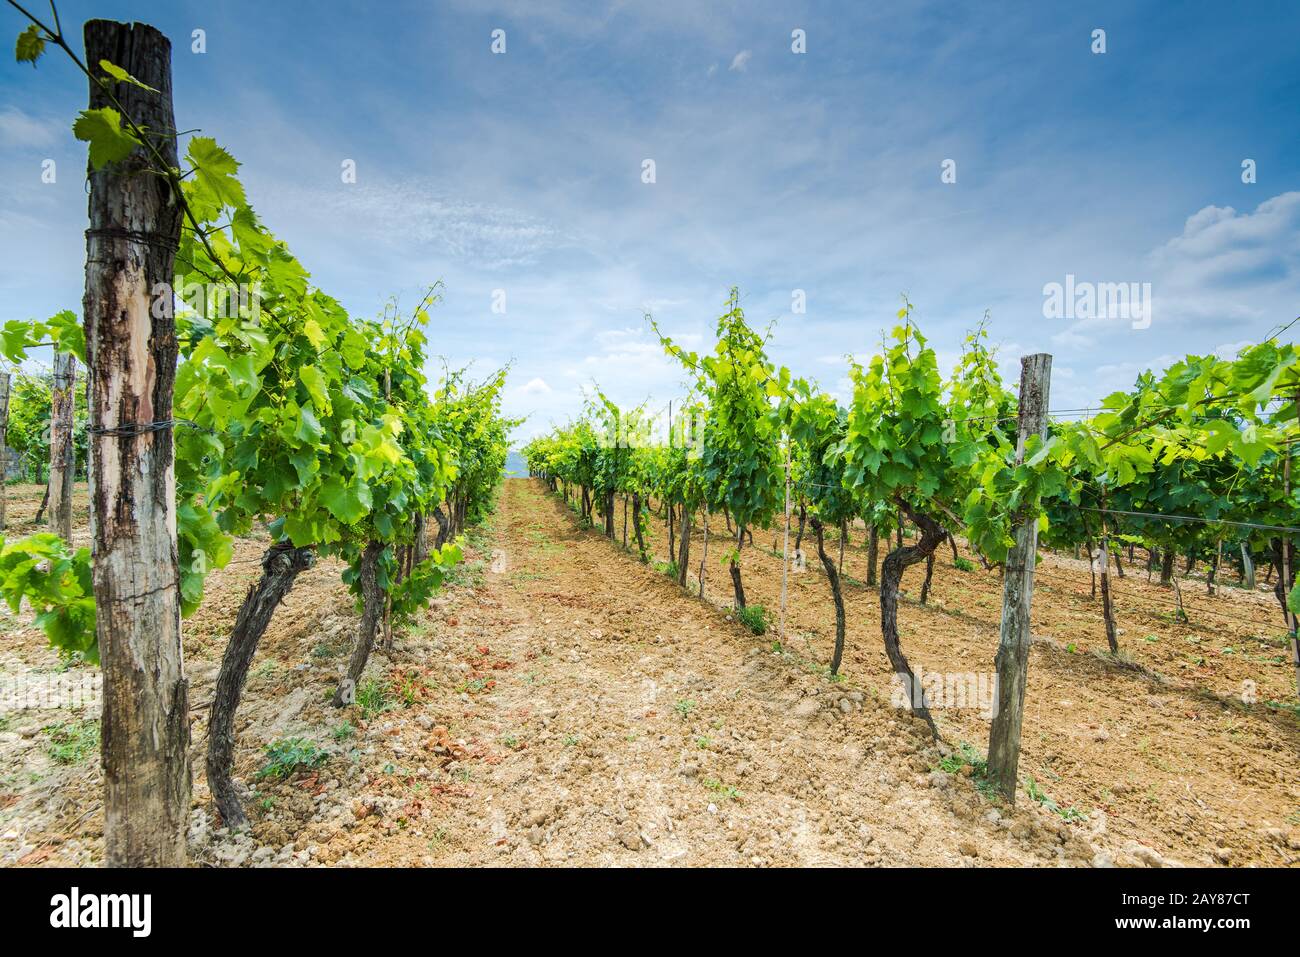 Rows of grape vine in fields Stock Photo